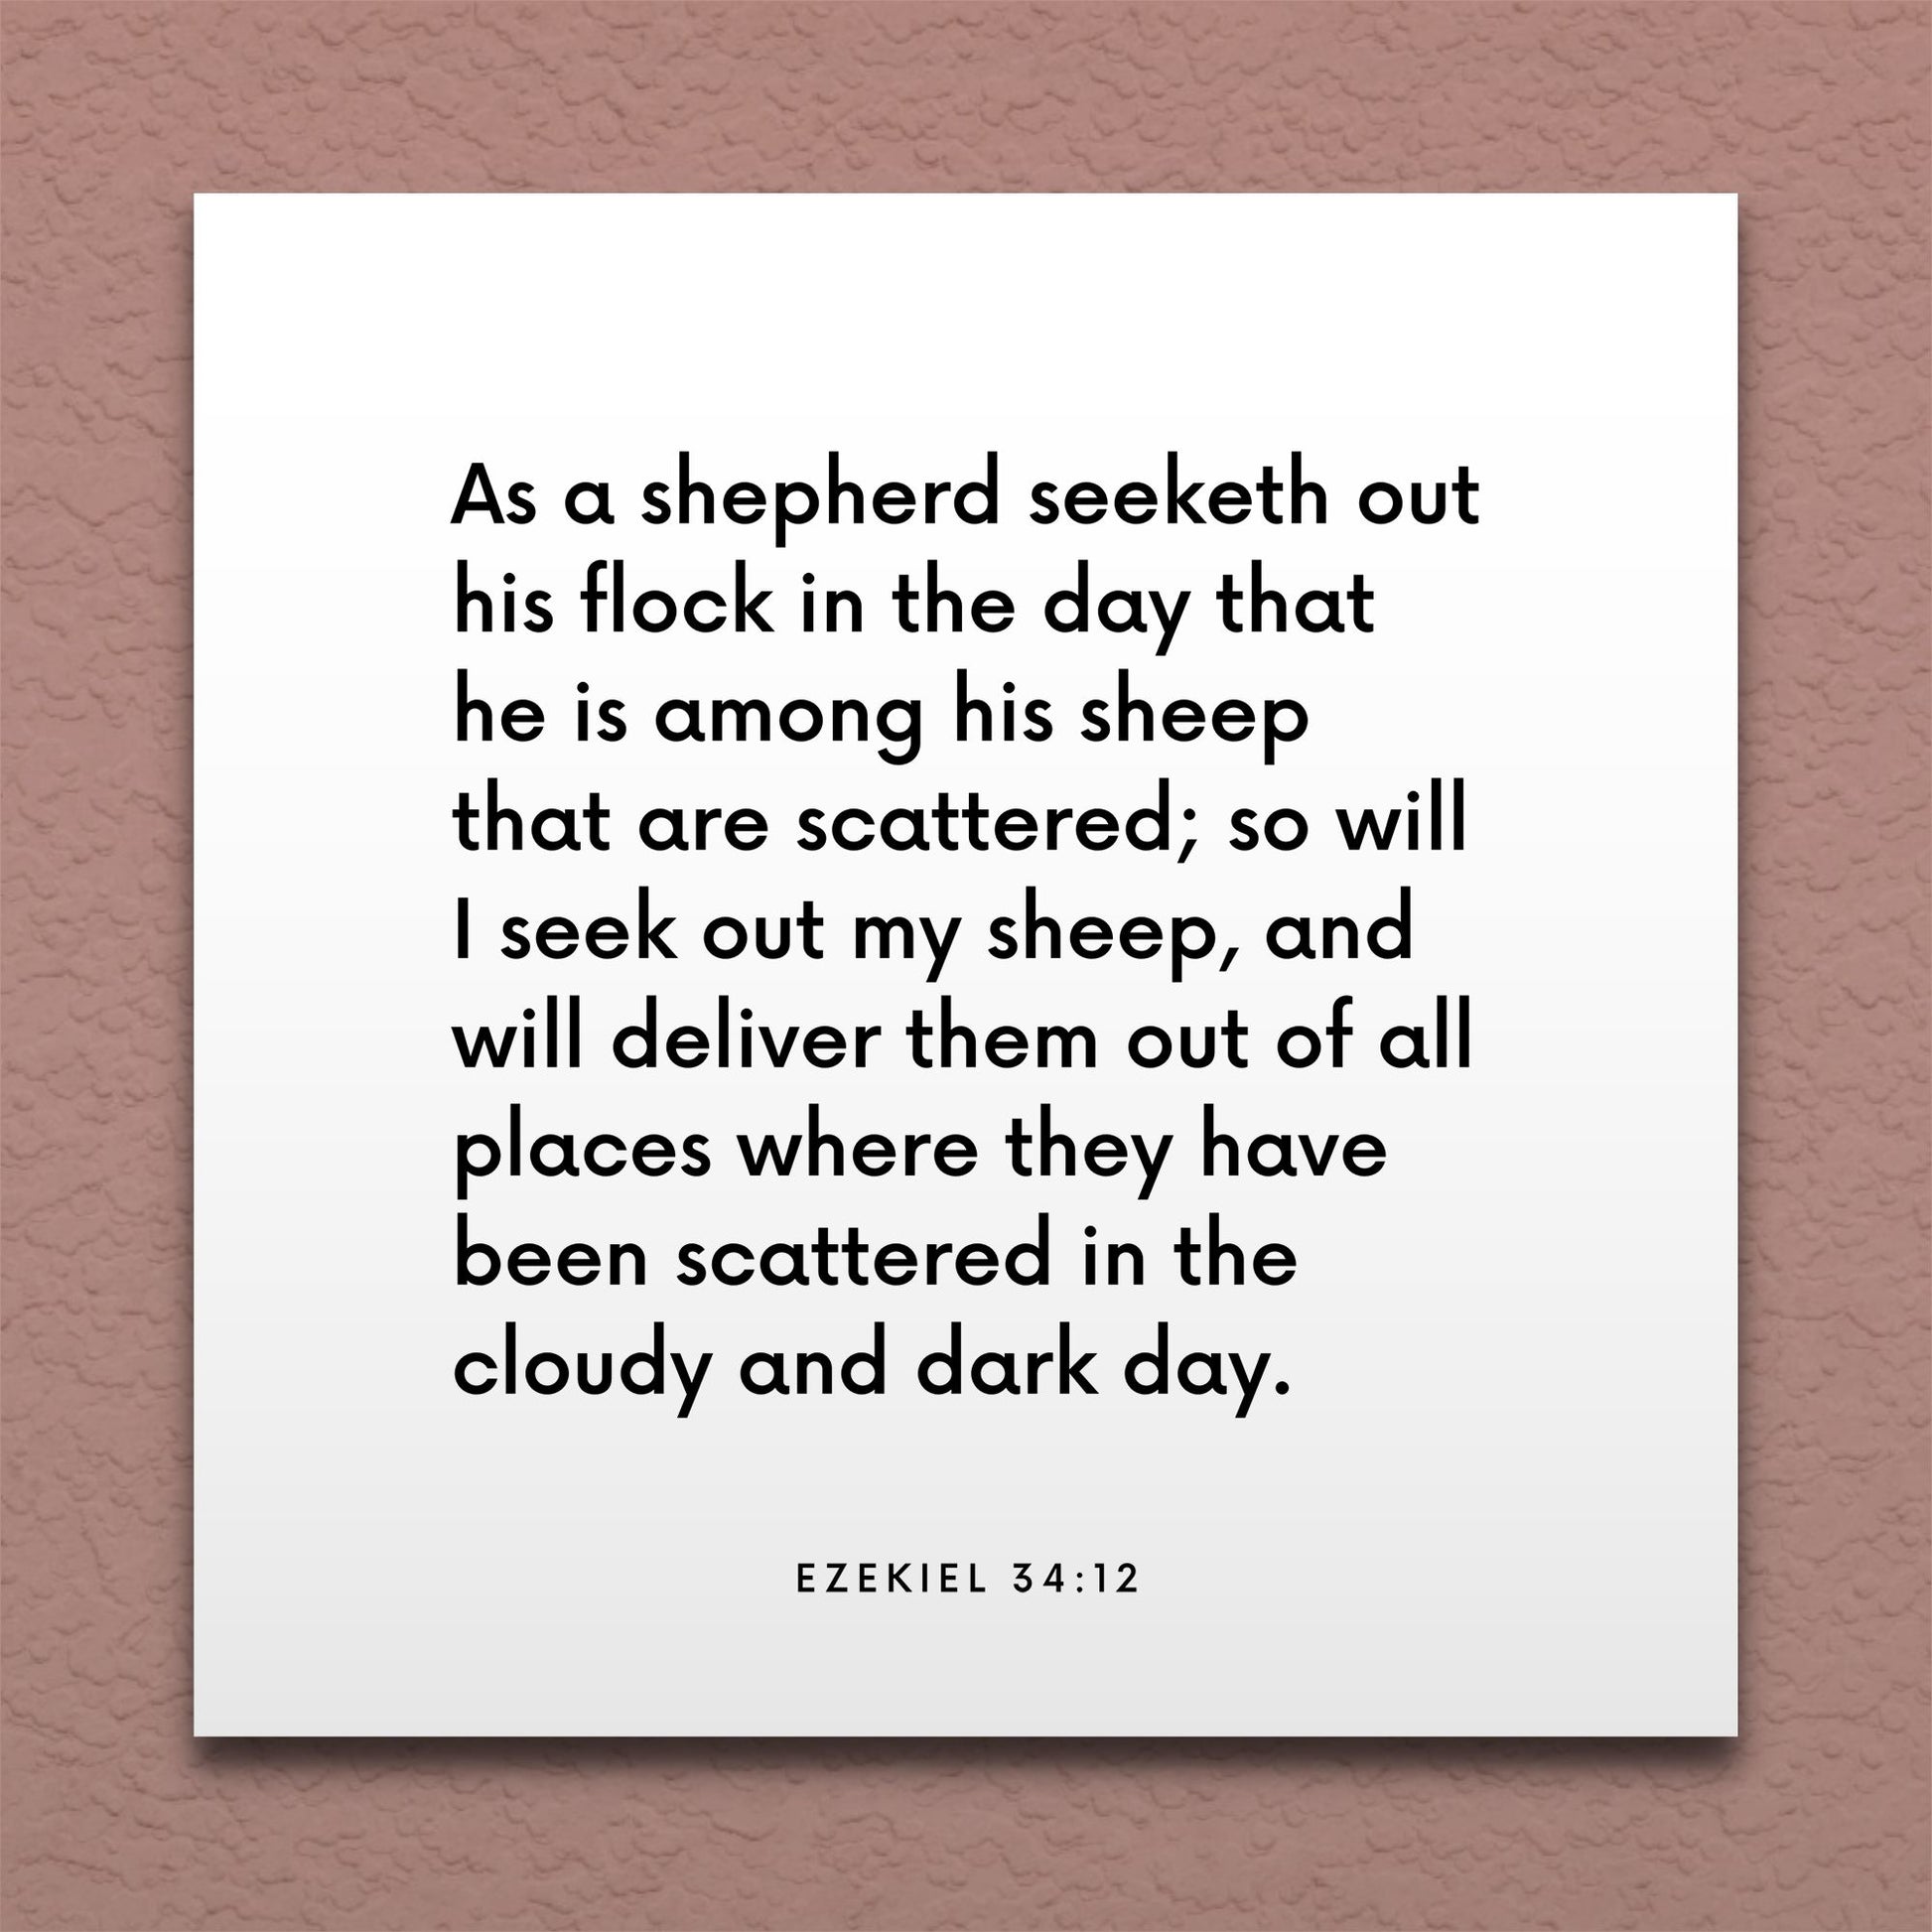 Wall-mounted scripture tile for Ezekiel 34:12 - "A shepherd seeketh out his flock"